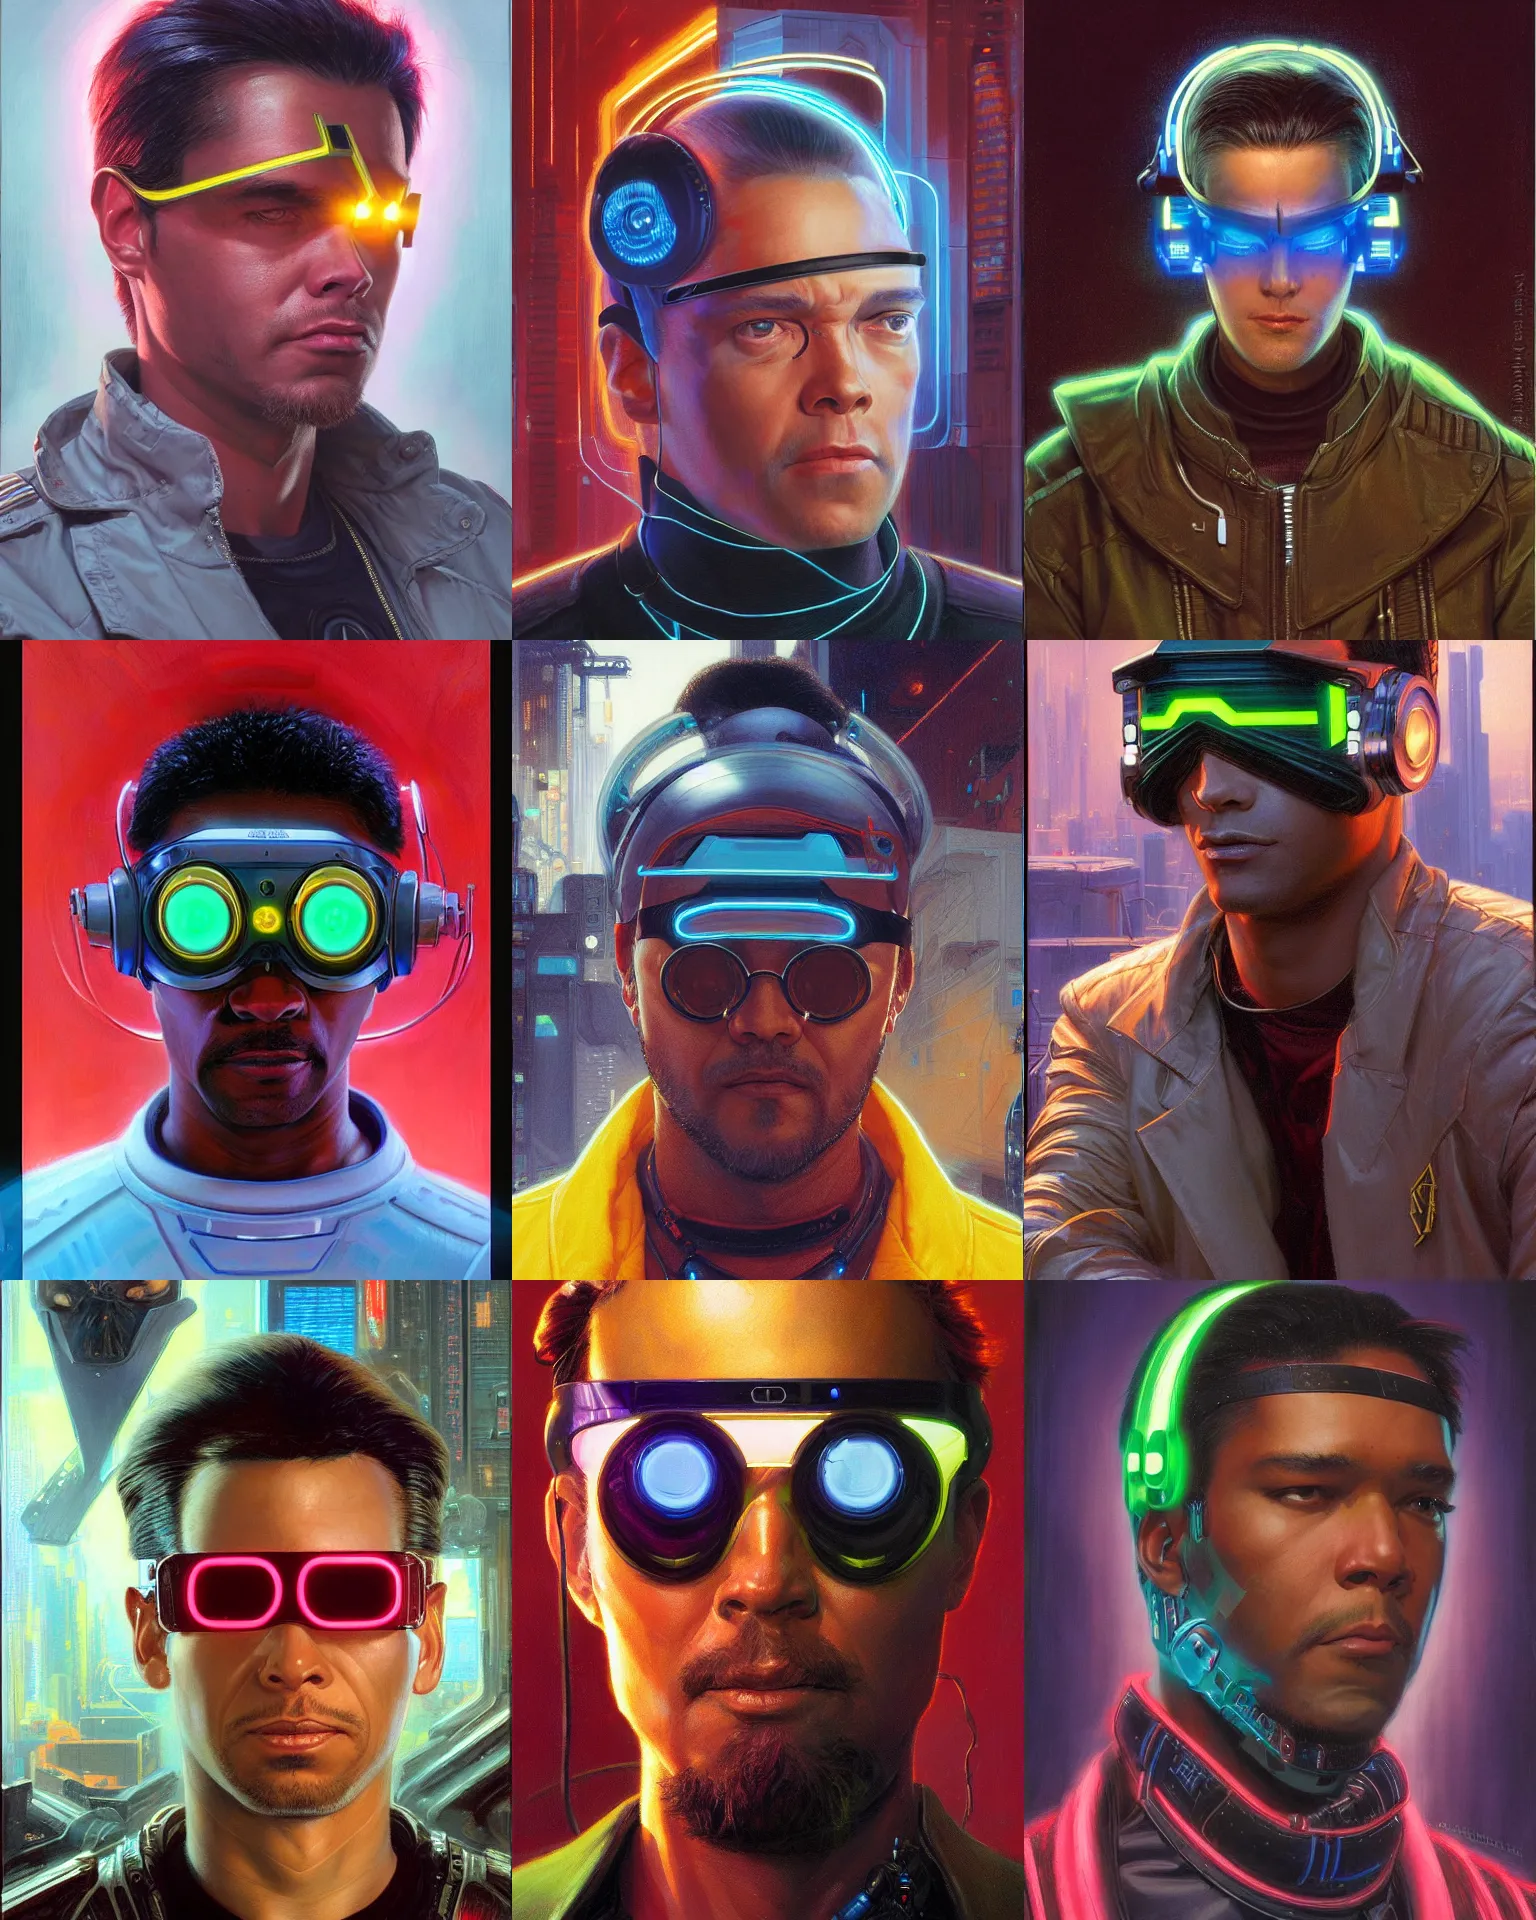 Prompt: digital neon cyberpunk male with geordi eye visor and headset headshot portrait painting by donato giancola, kilian eng, hayao miyazaki, j. c. leyendecker, mead schaeffer